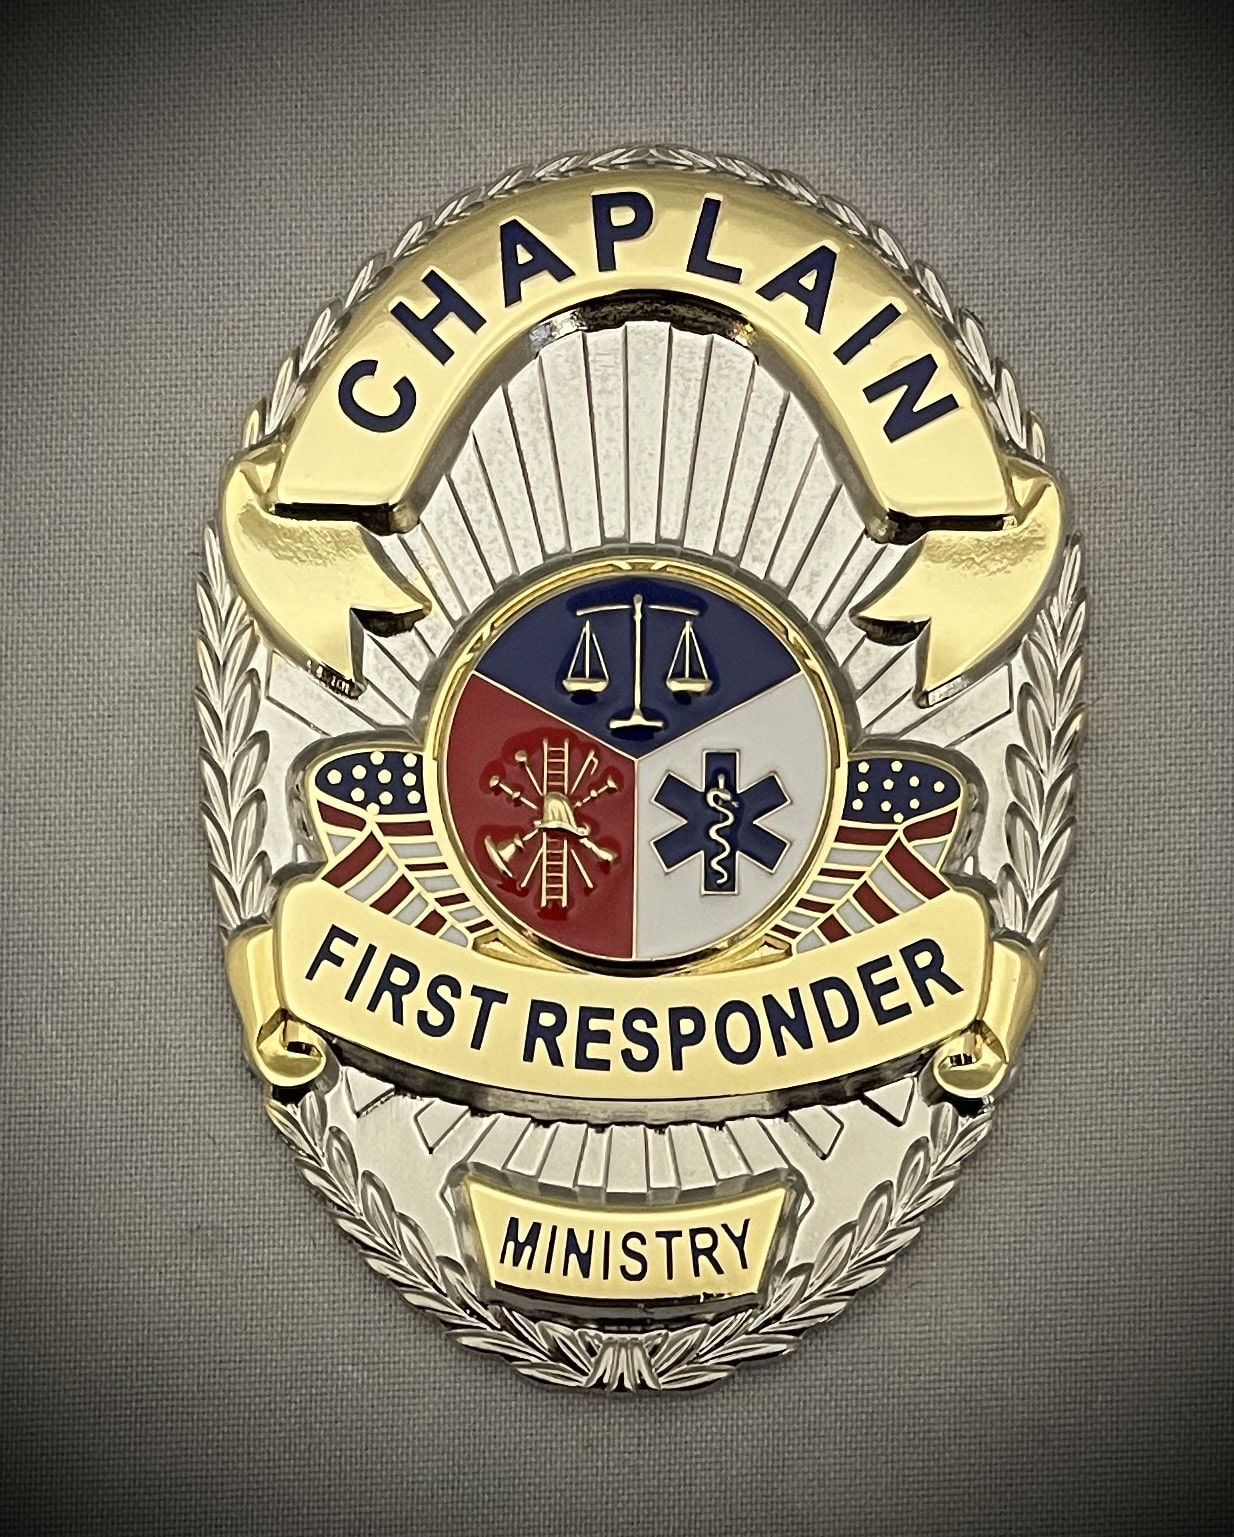 Chaplain First Responder Badge with (Black or Brown) leather belt clip holder